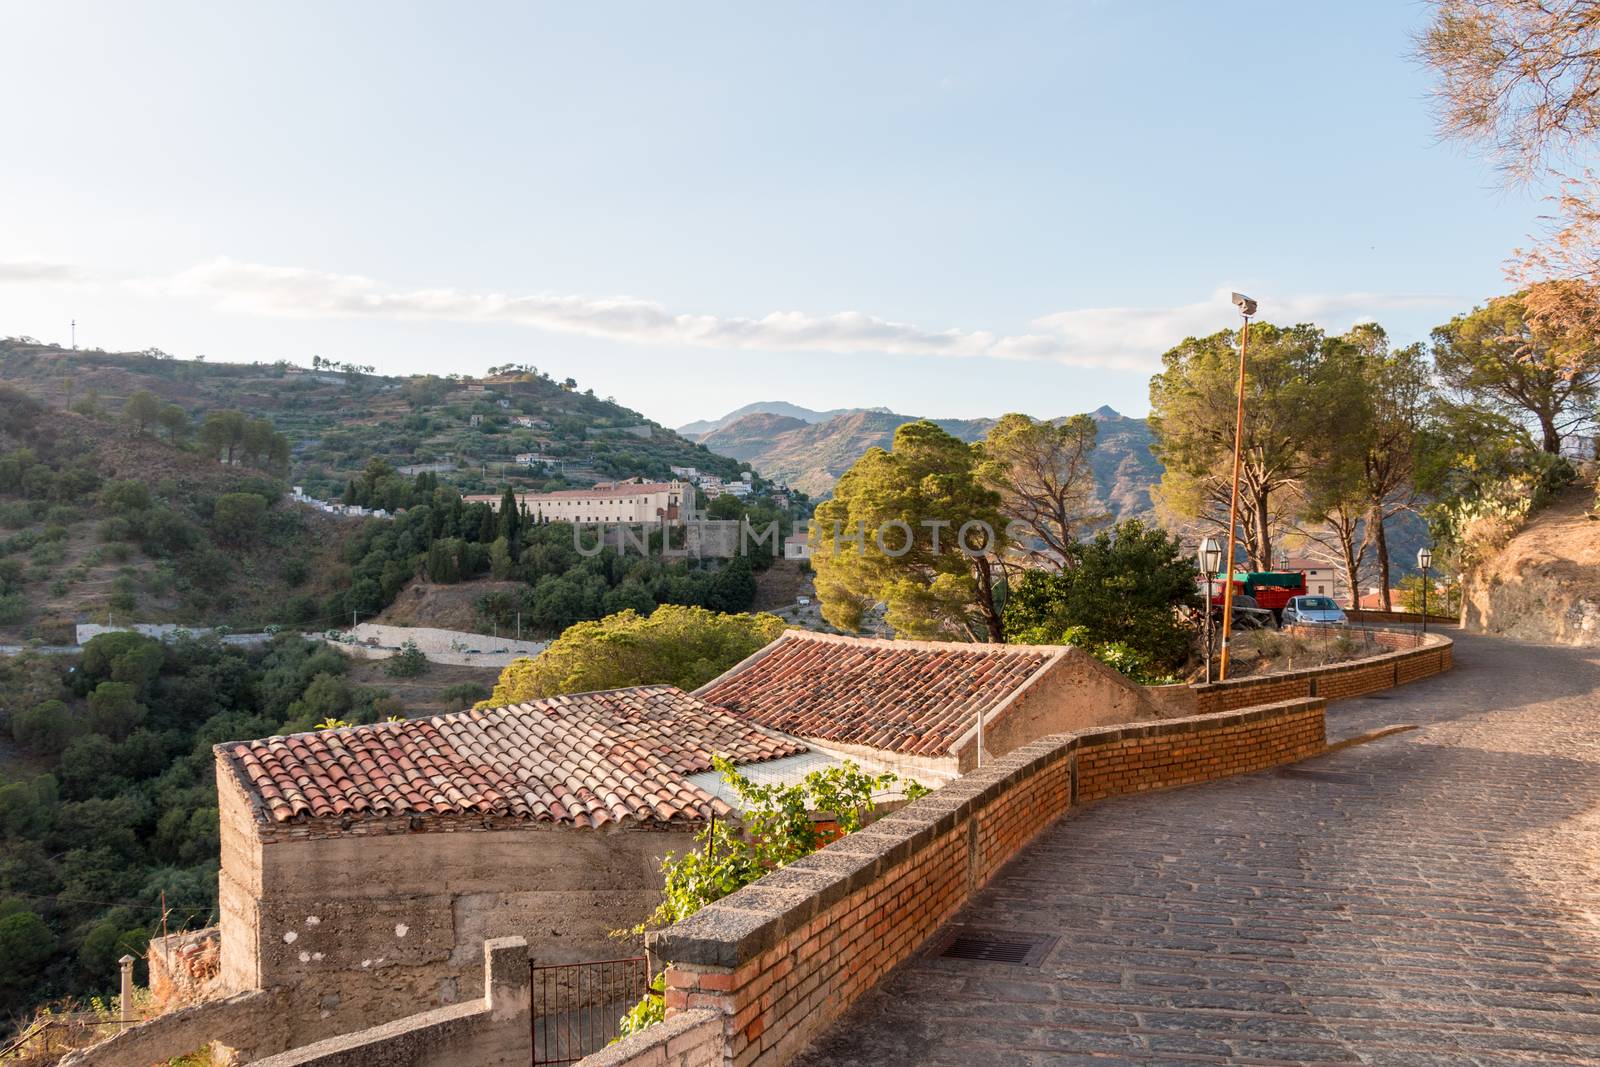 Panoramic road in Savoca small Sicilian town